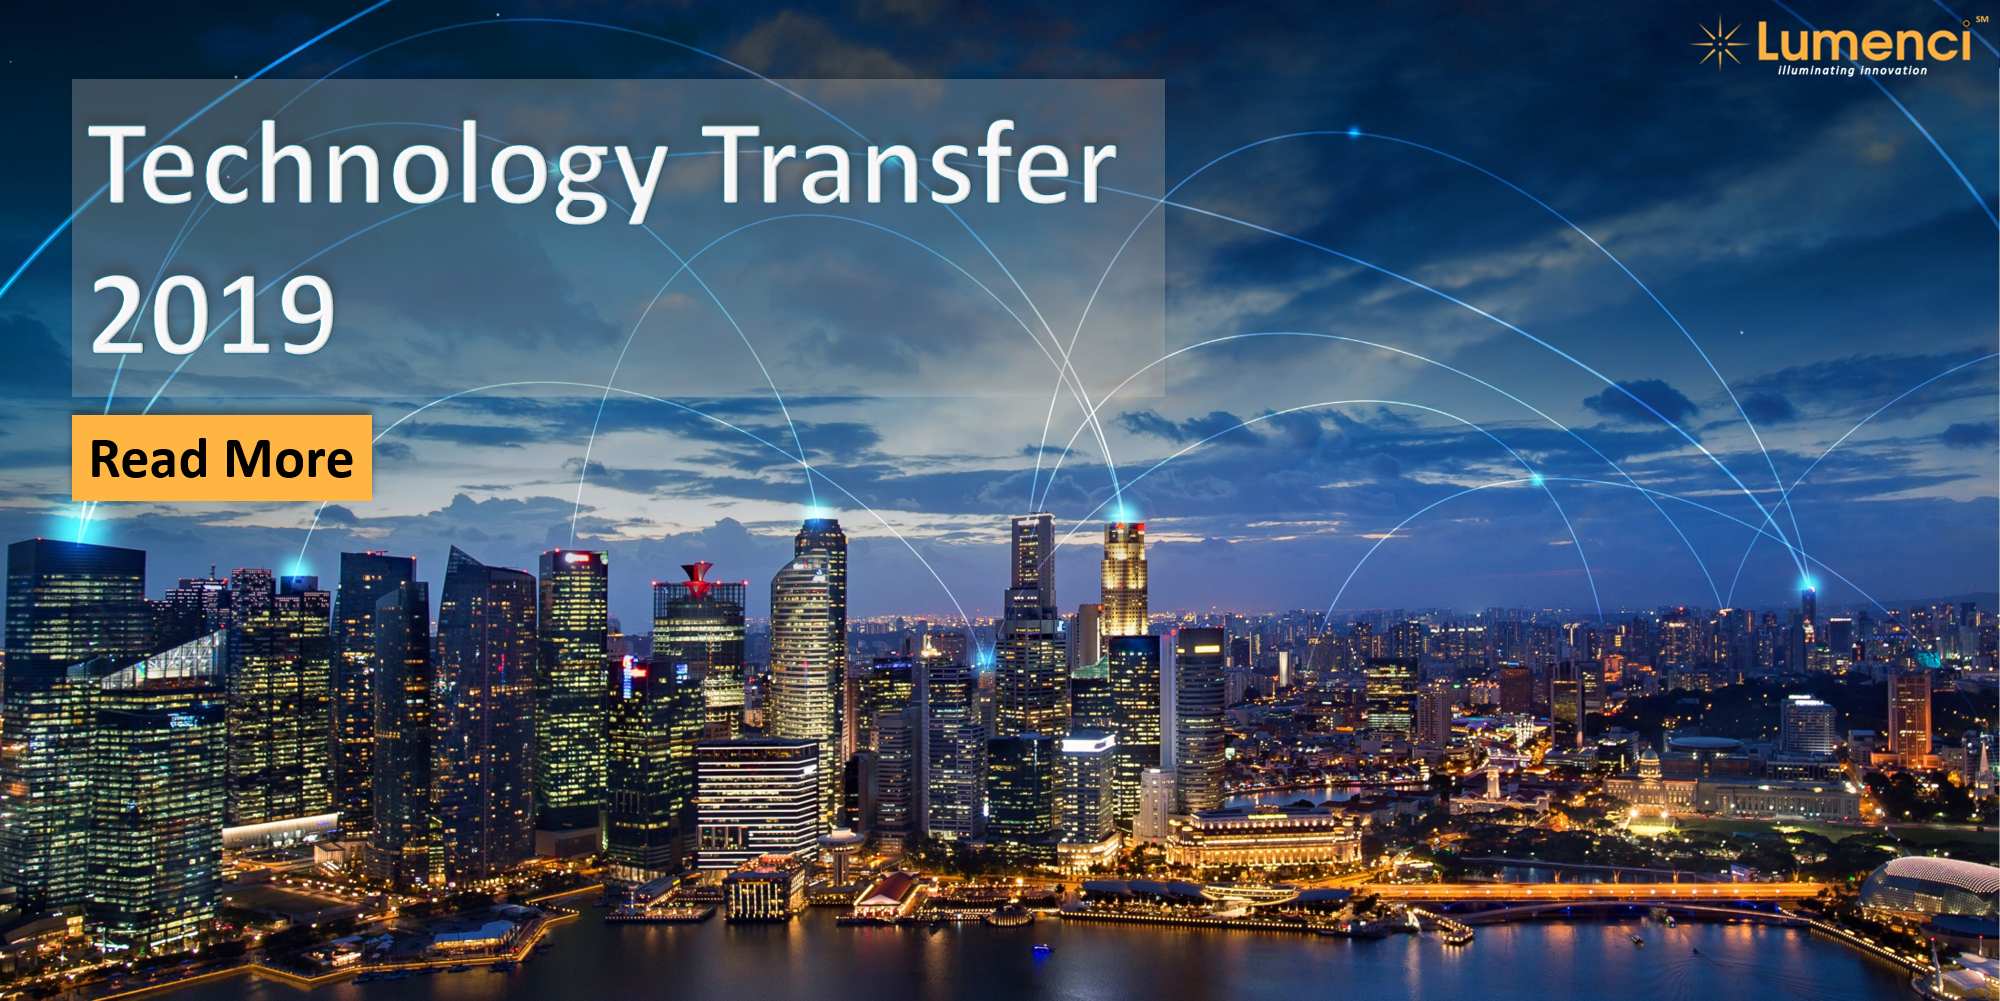 Technology Transfer 2019